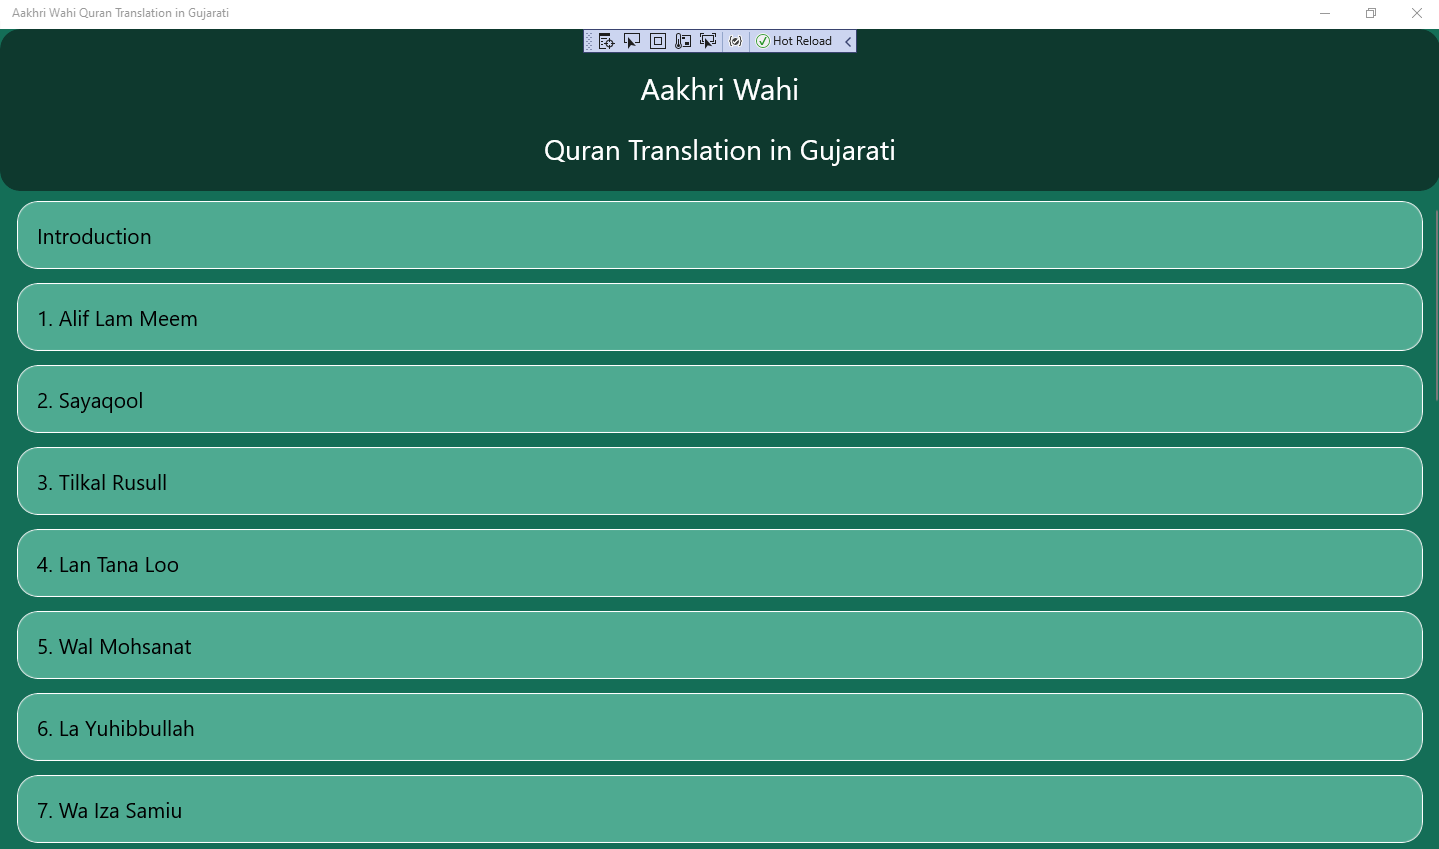 Aakhri Wahi Quran Translation in Gujarati